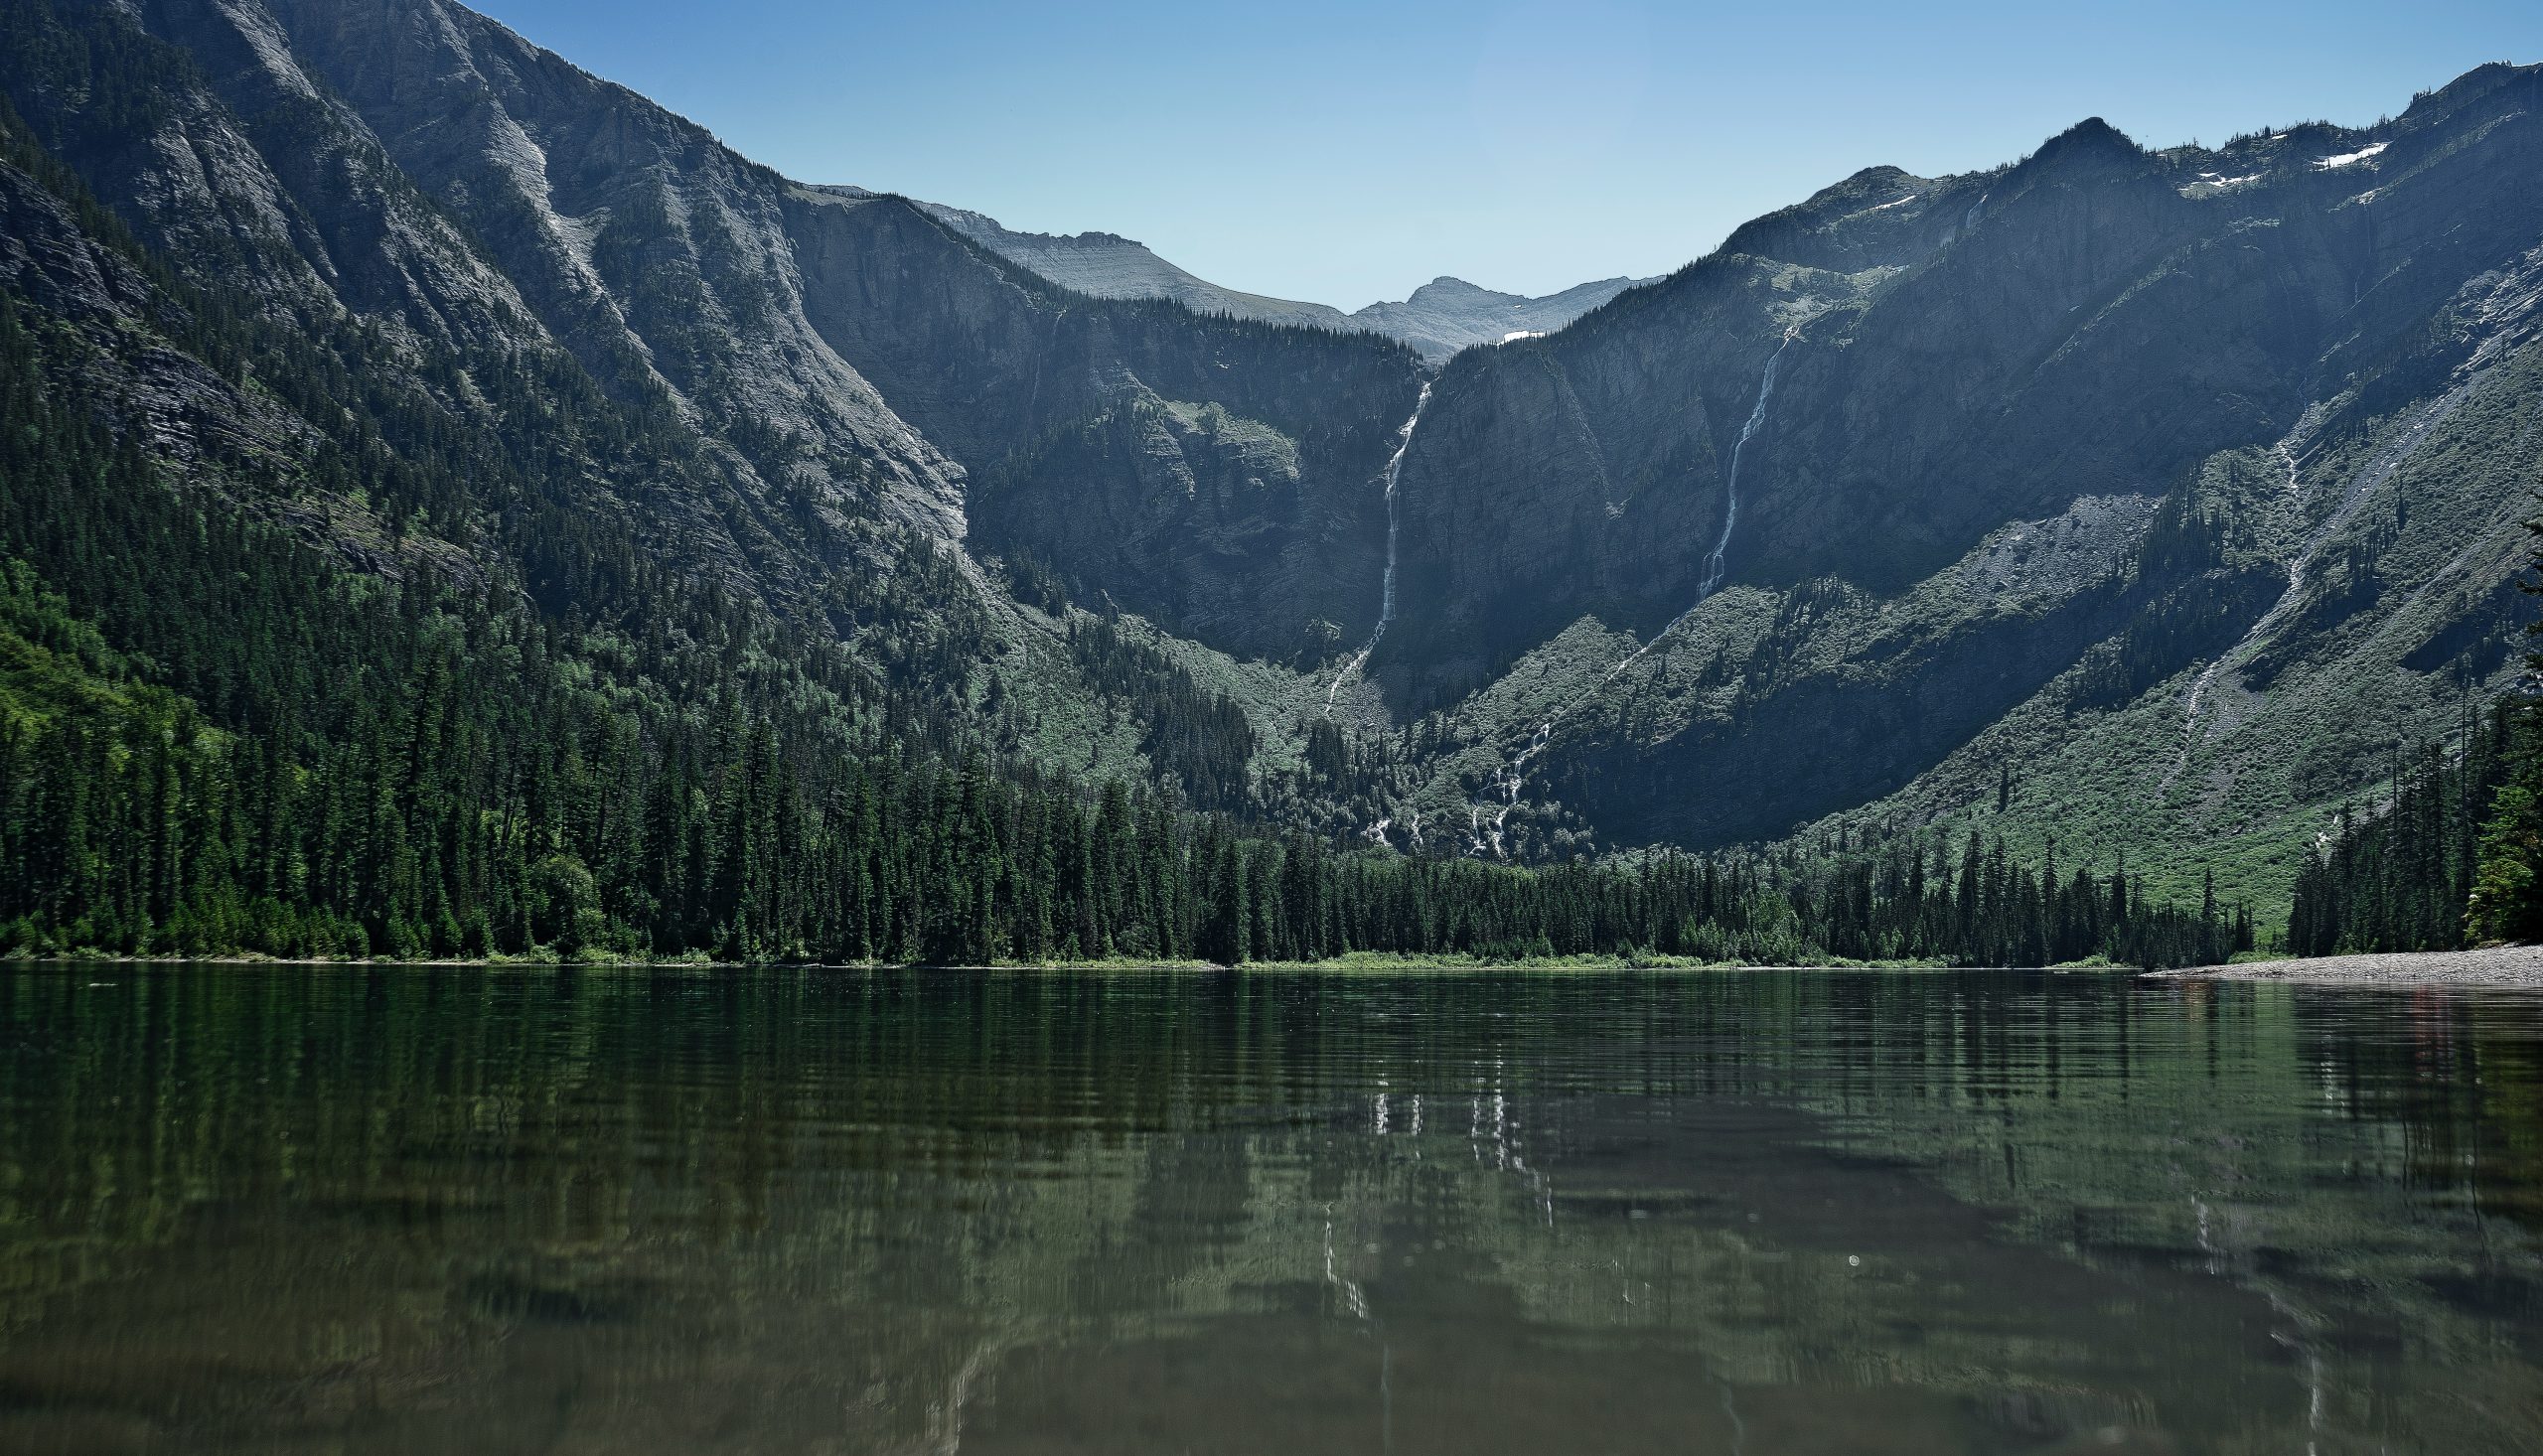 Photo of Missoula lake and mountains